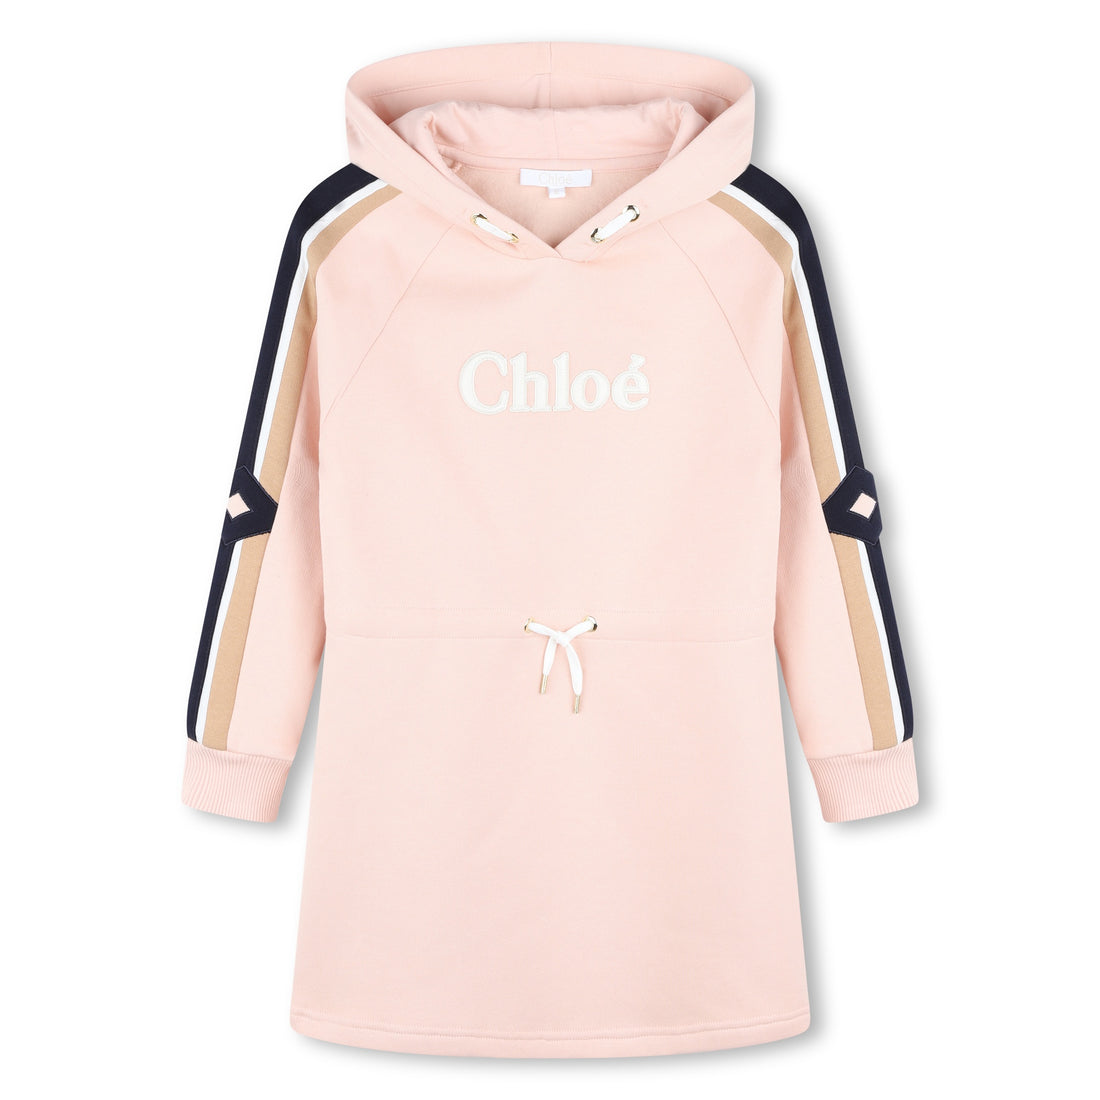 Chloe Hooded Dress Style: C12941